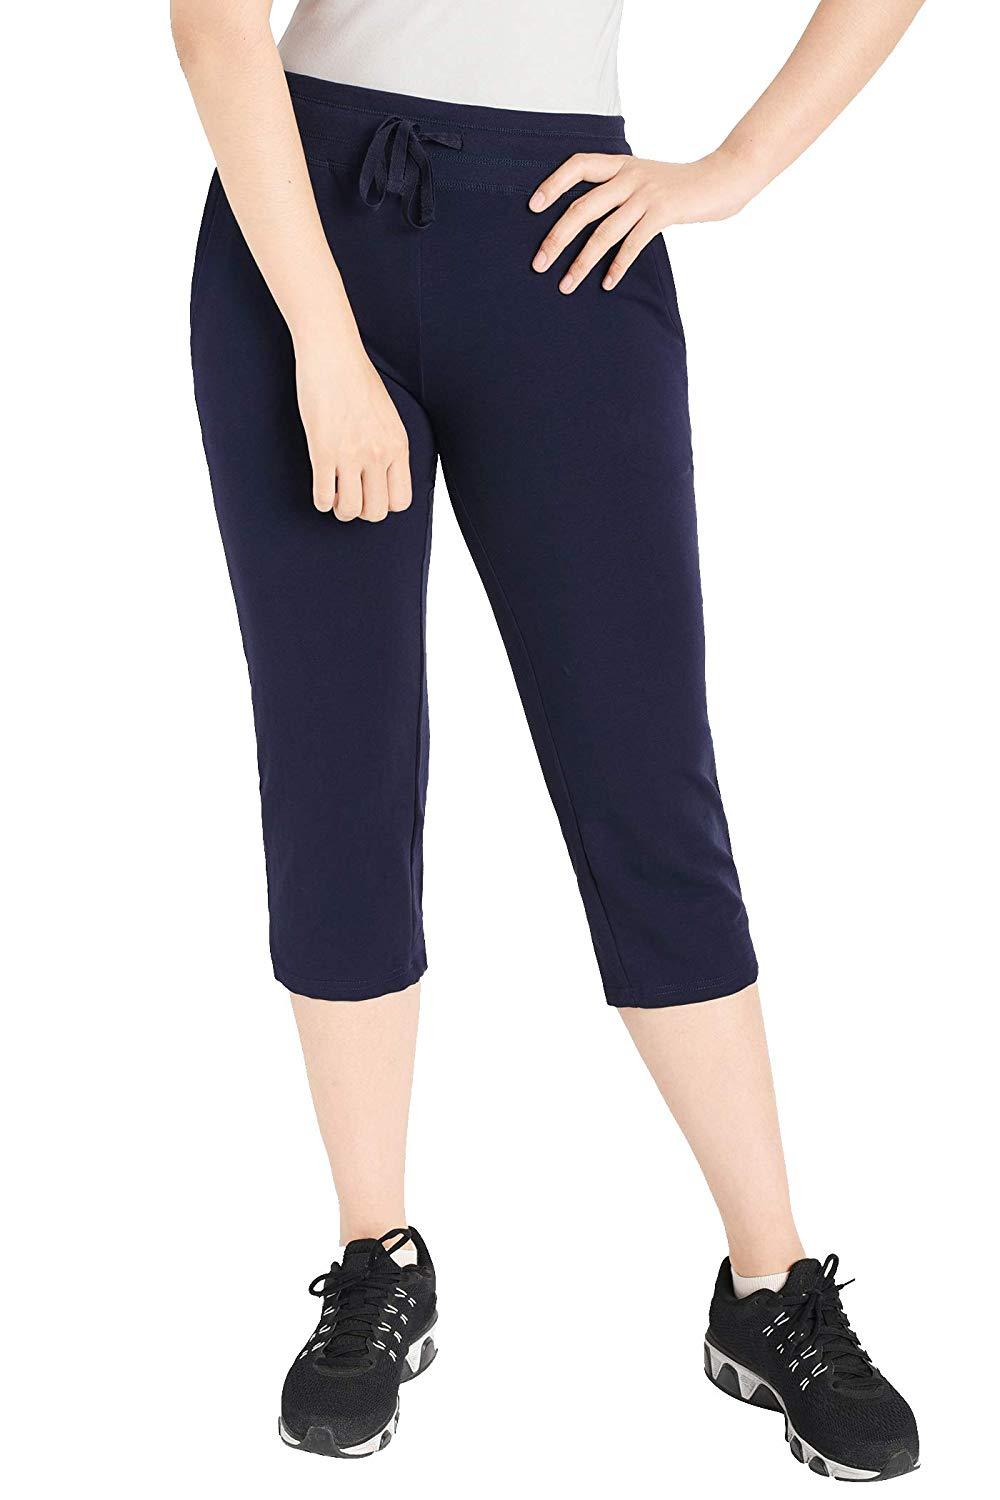 Cotton Jersey Knit Women's Capri Leggings Pants (Tropical Punch, Large)